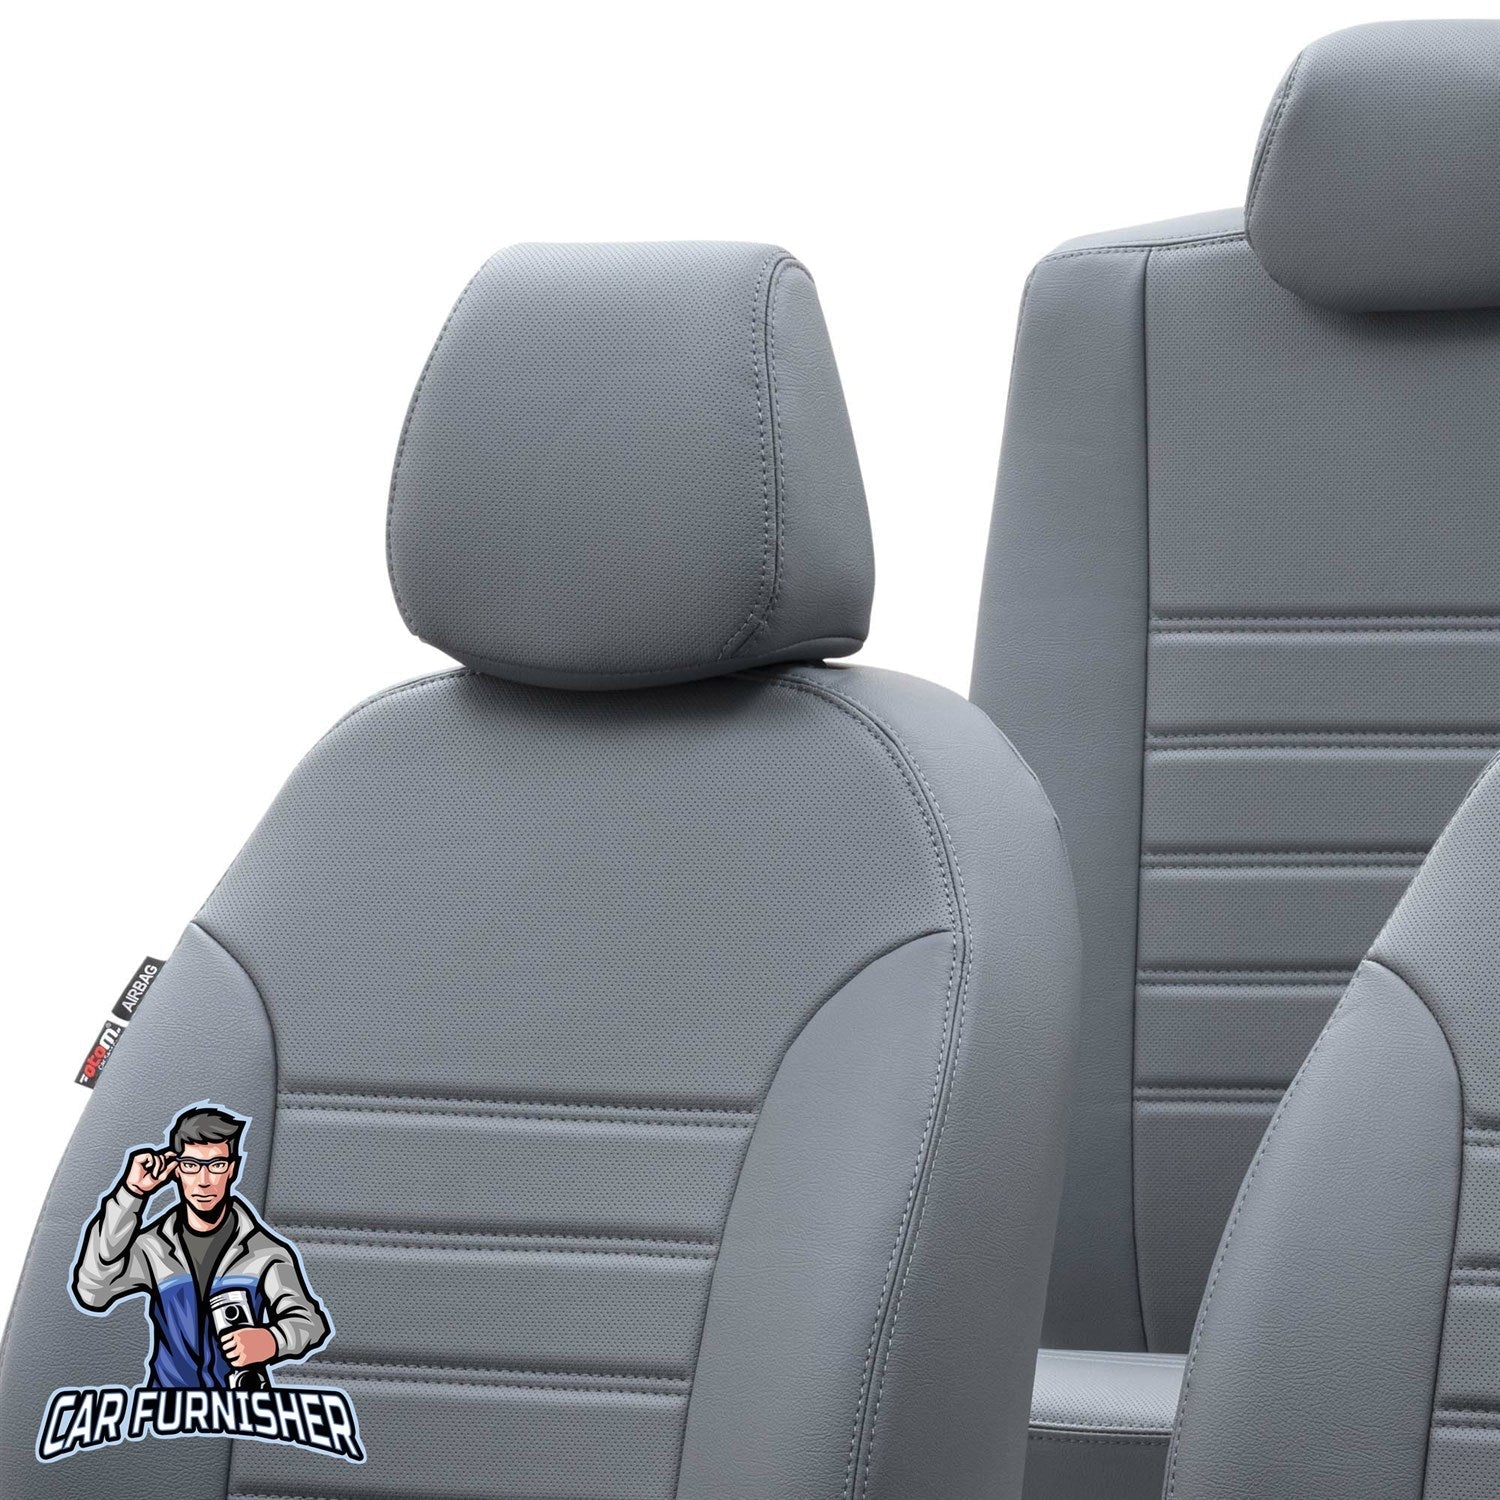 Bmw 1 Series Car Seat Cover 2004-2019 E87/F20 Istanbul Design – Carfurnisher